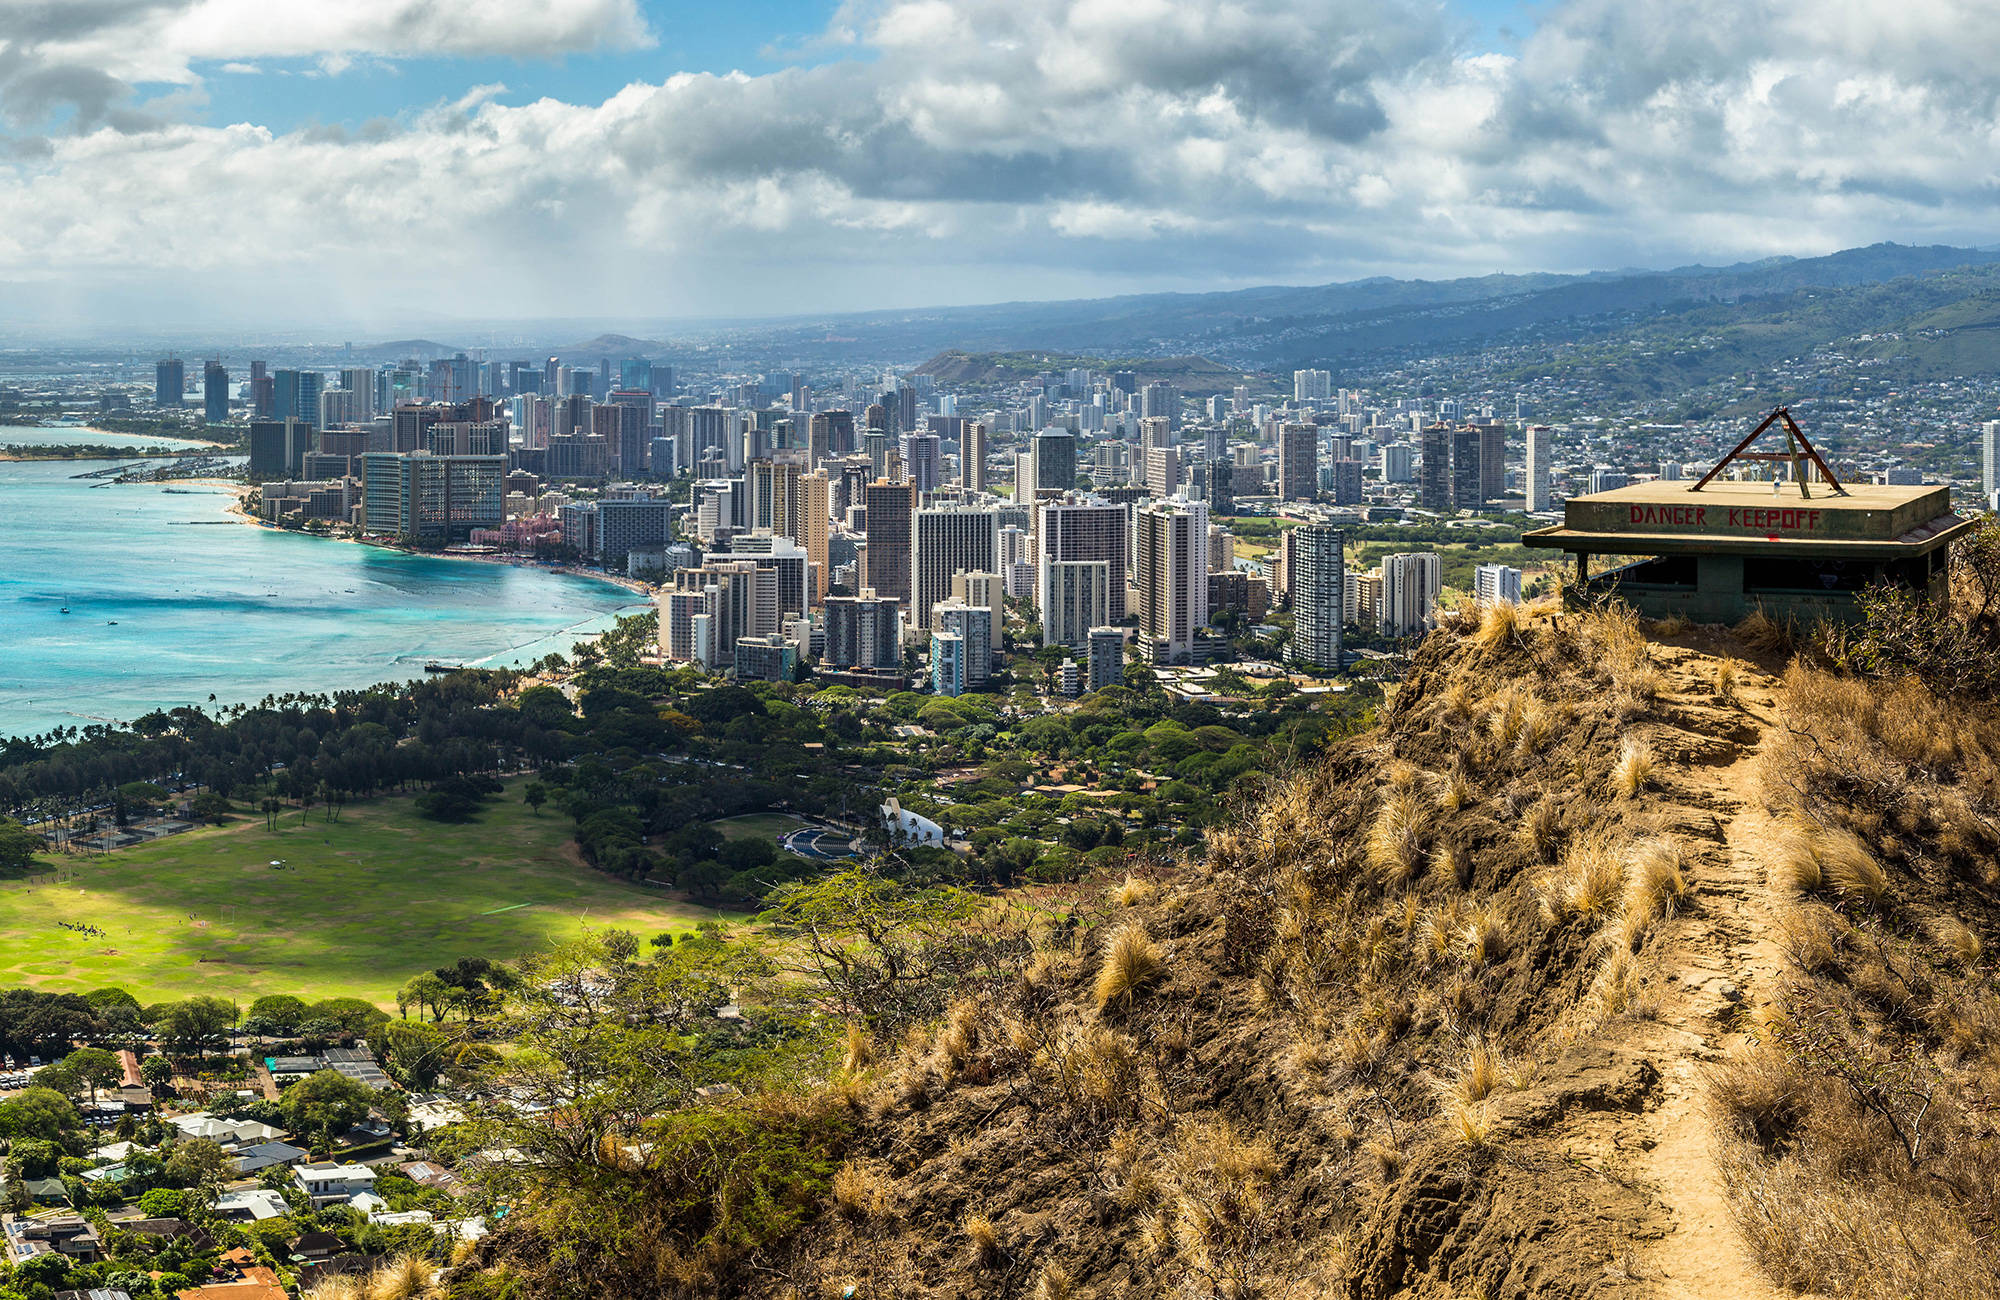 The skyline of Honolulu